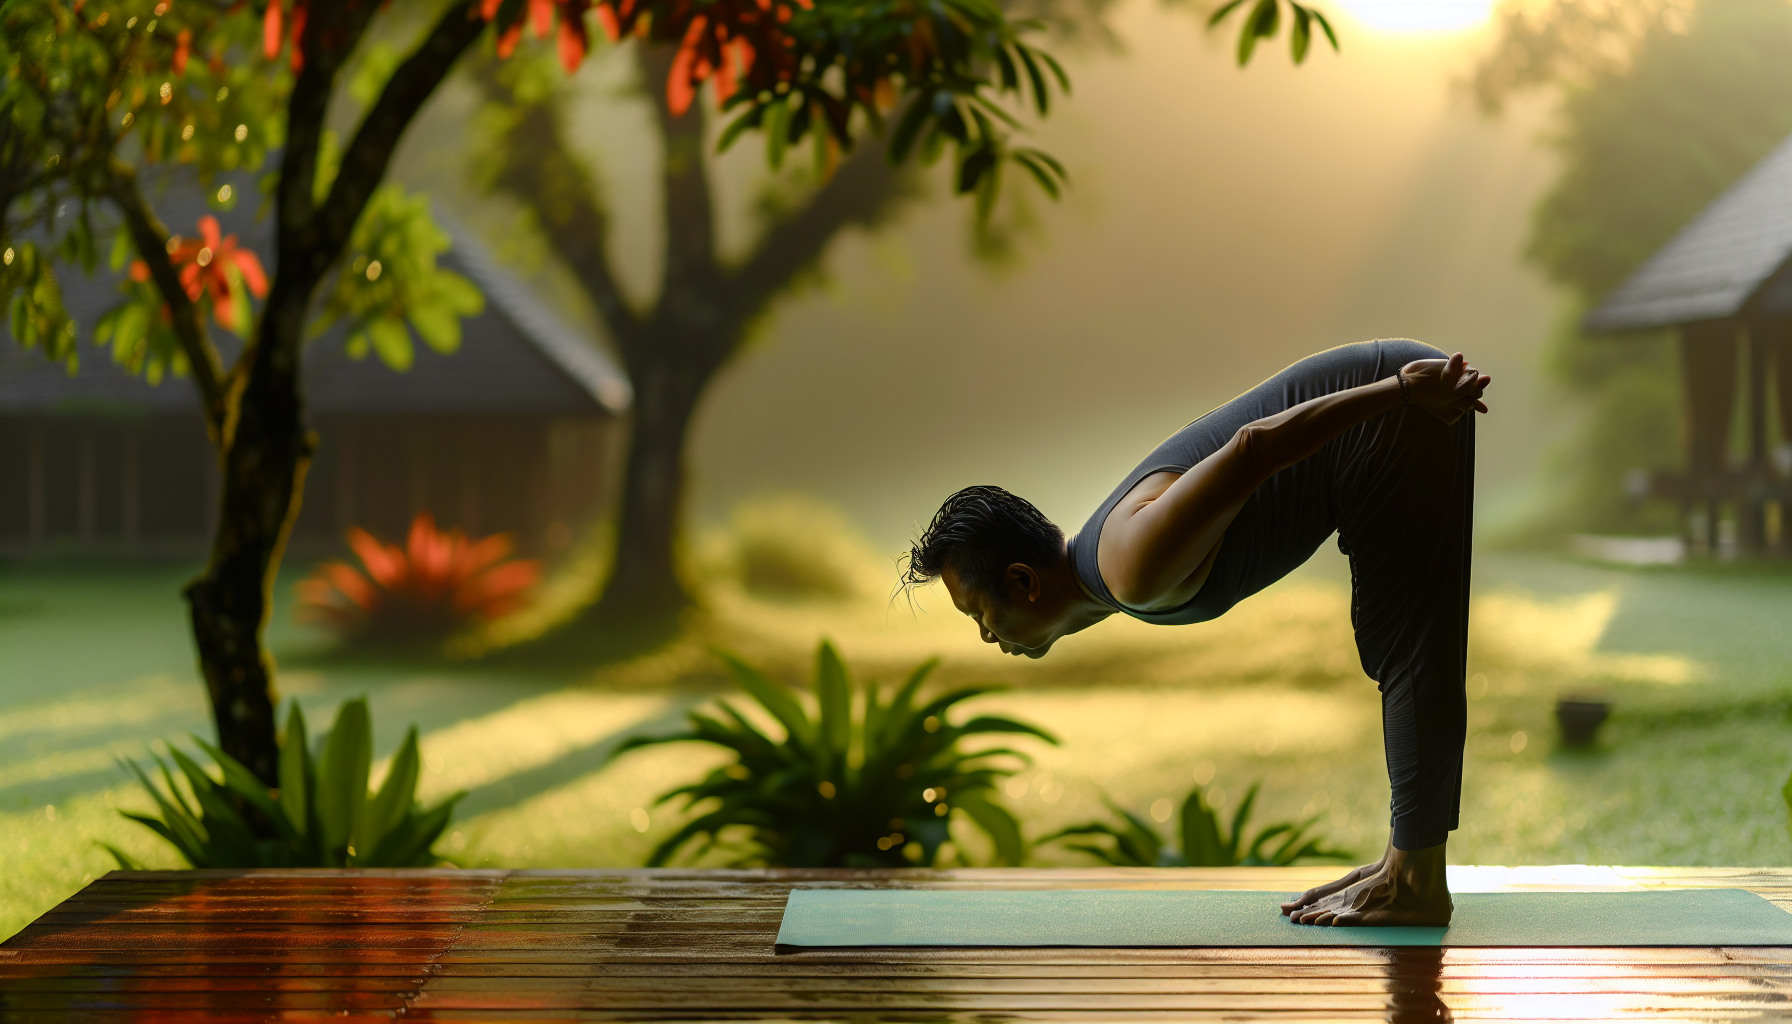 Yoga teacher practicing yoga.